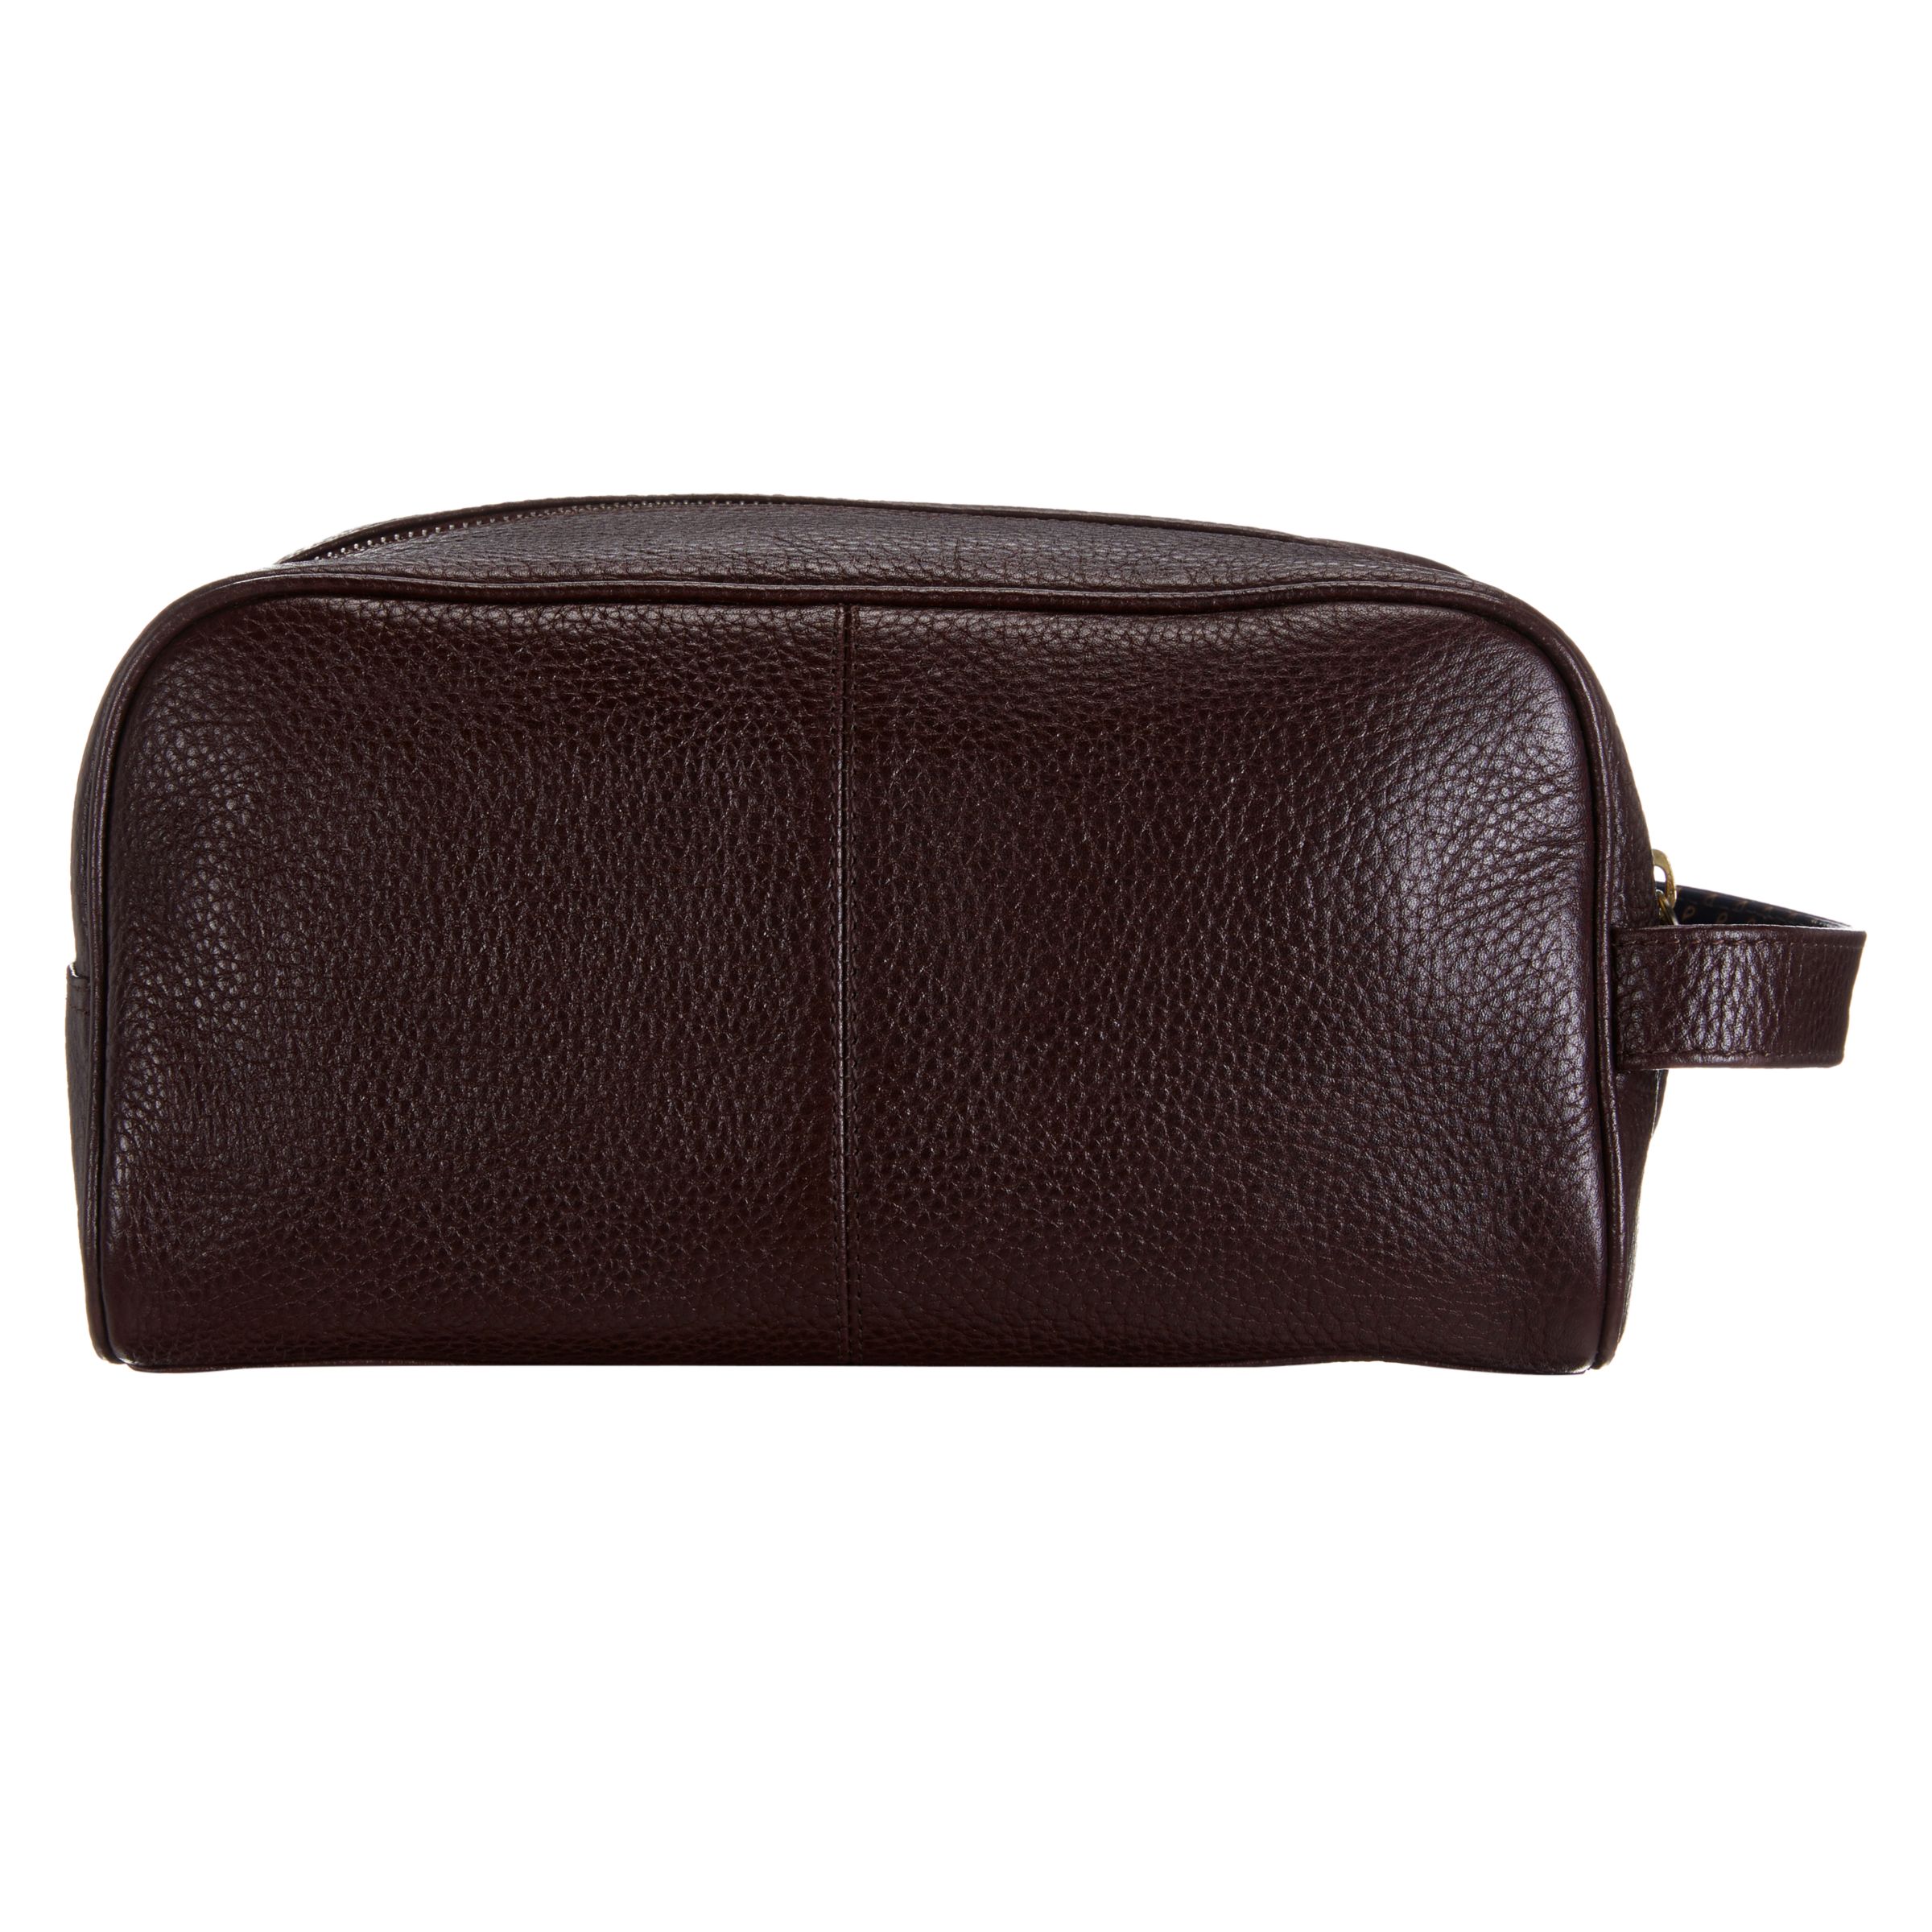 John Lewis & Partners Katta Aniline Leather Wash Bag